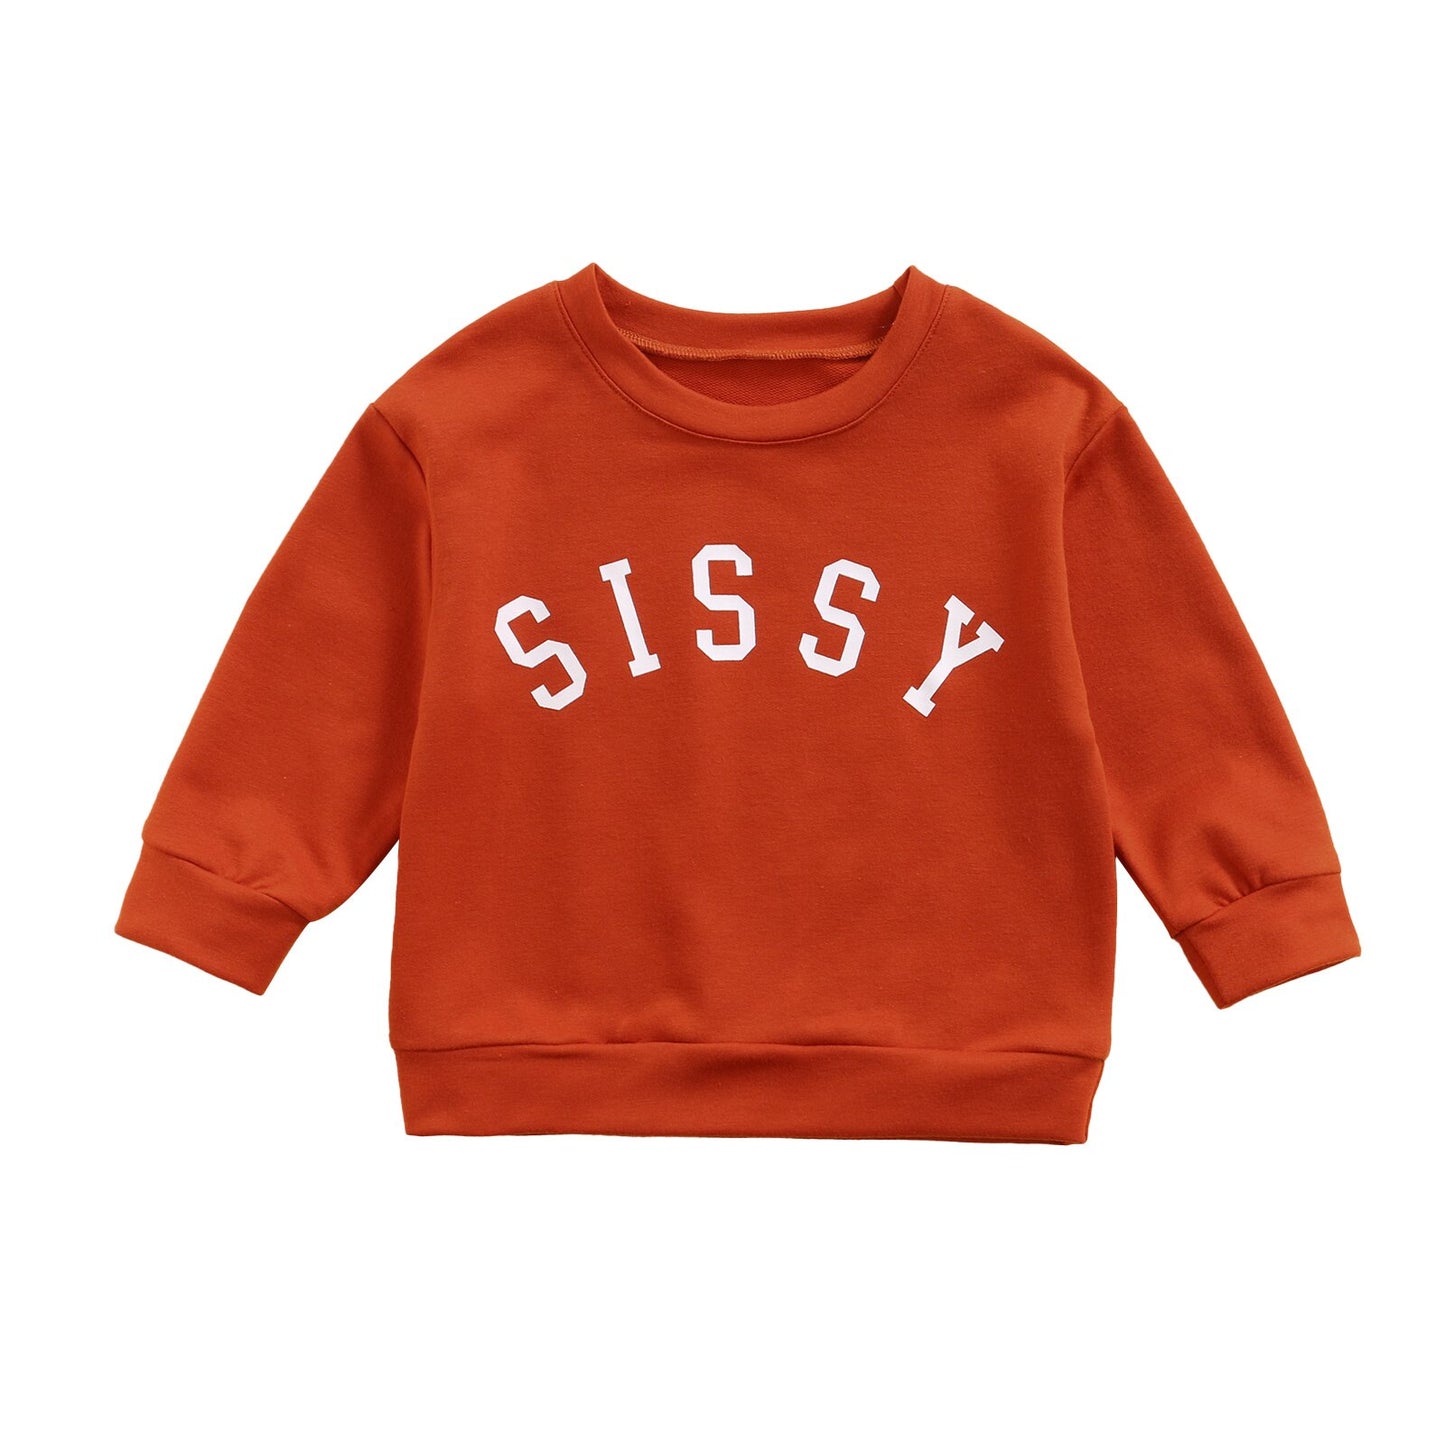 Sissy Cute Sweater For Girls 1-6Y